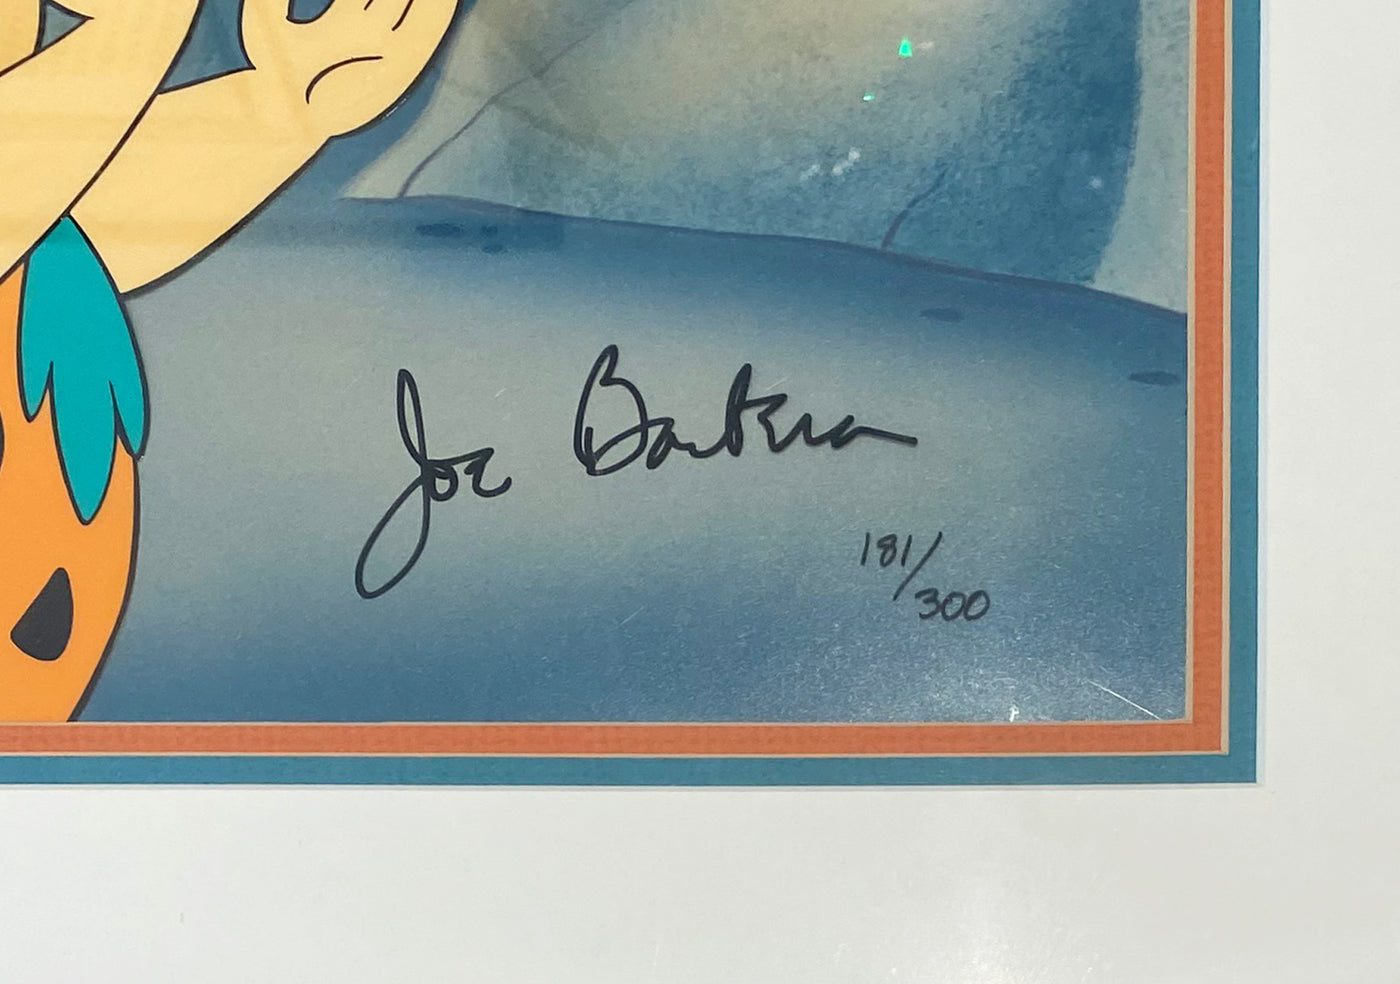 Original Hanna Barbera Limited Edition Cel "Tossing Pebbles" Signed by Bill Hanna and Joe Barbera